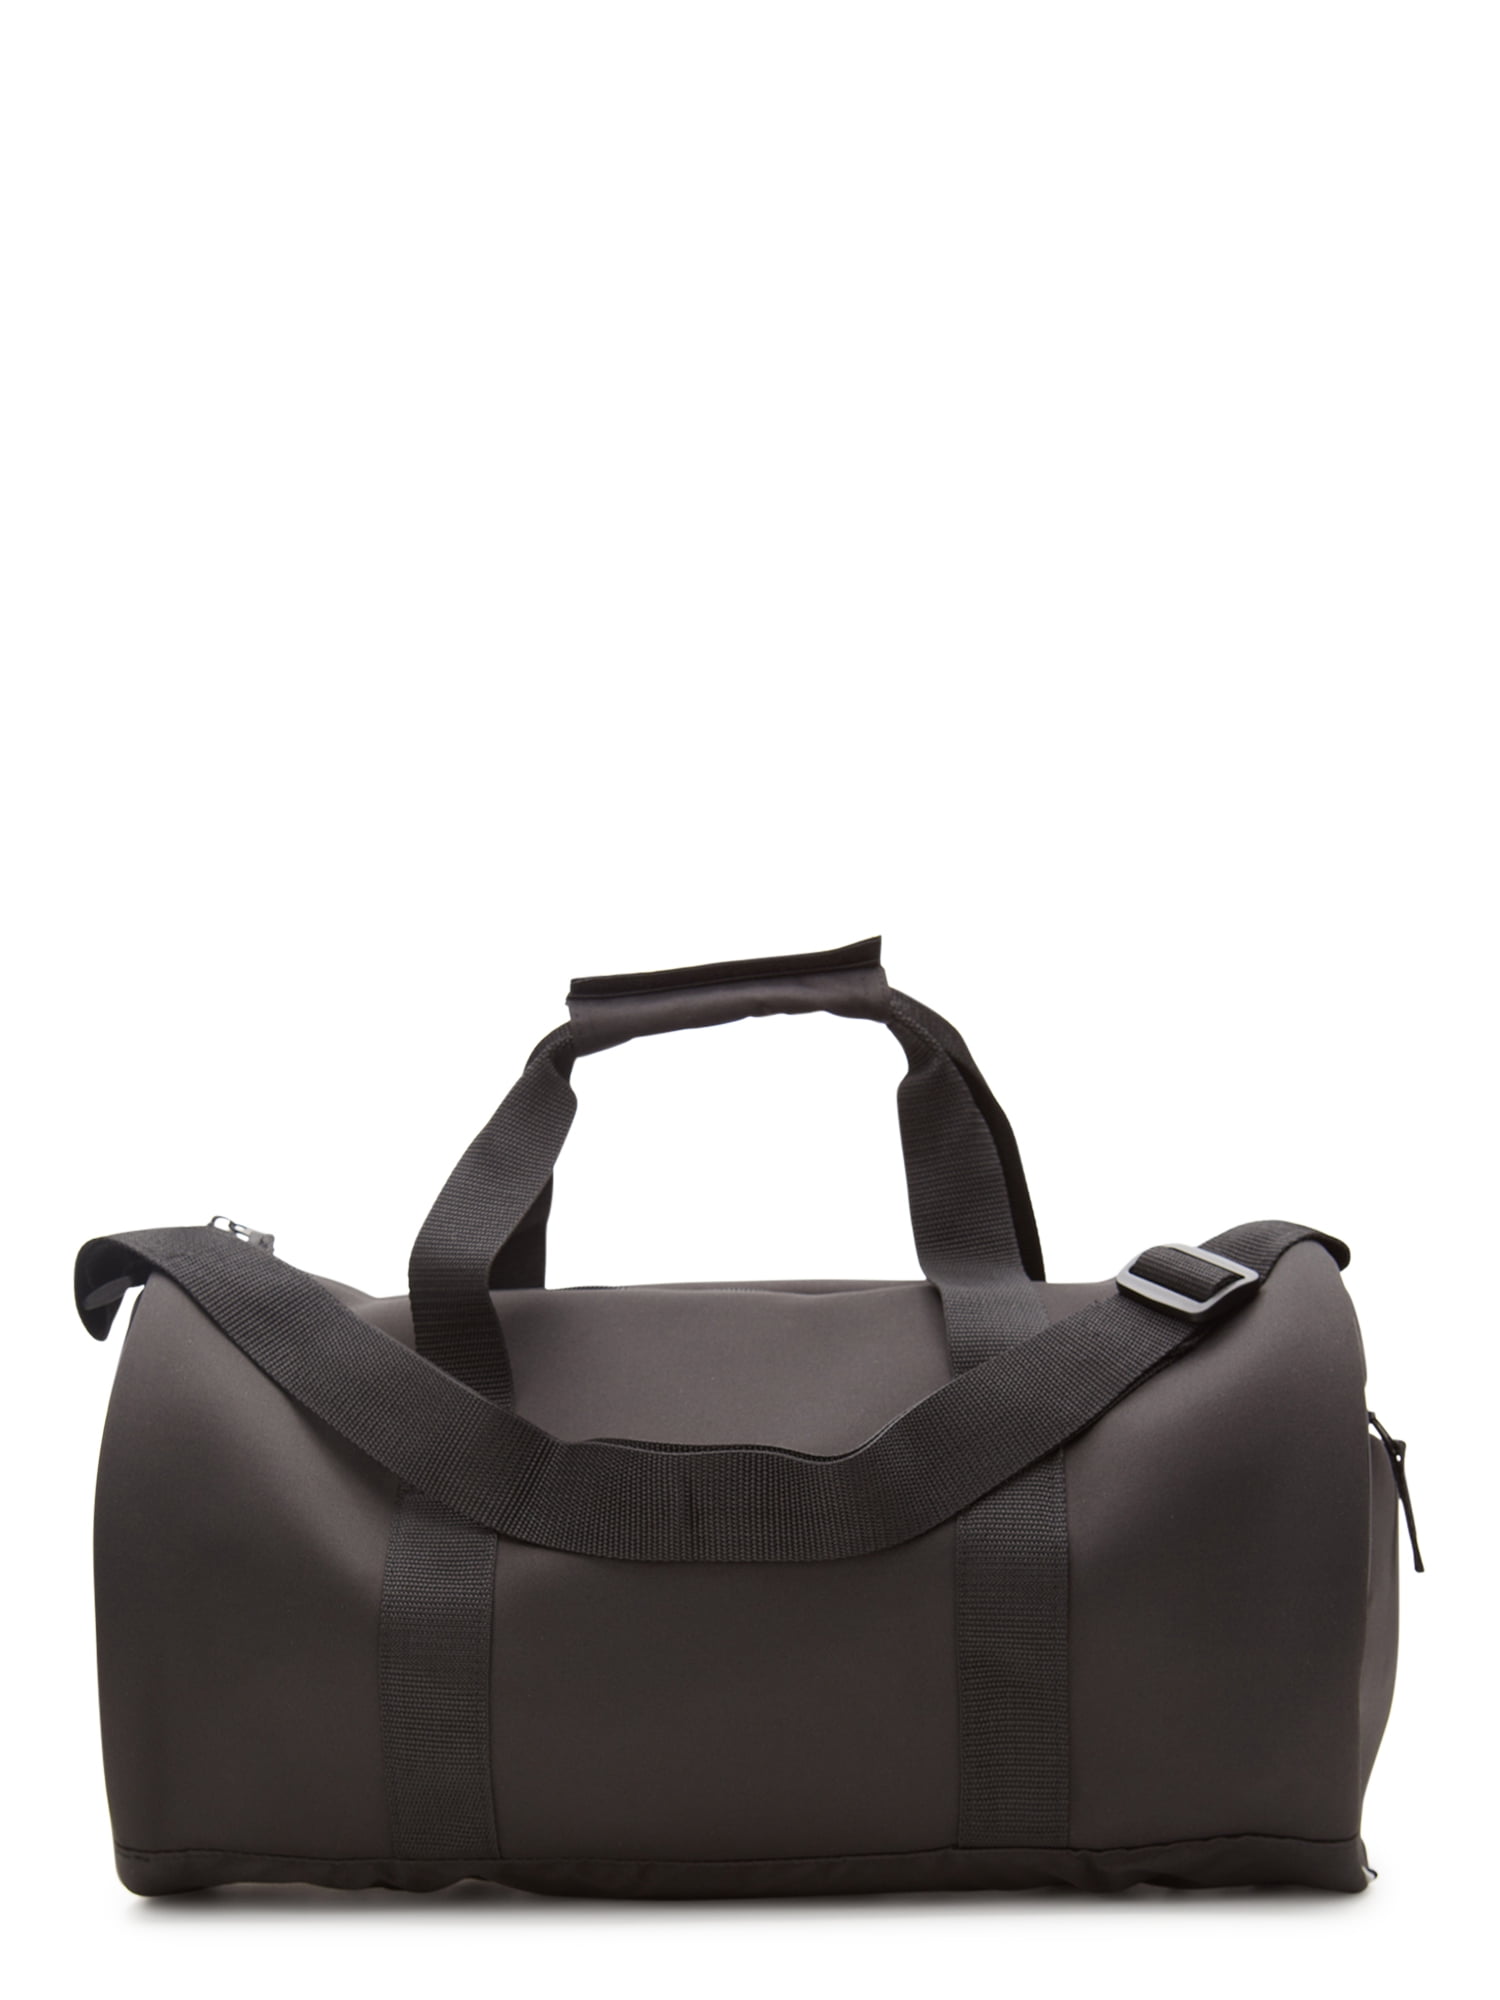 Reebok Women's Plyo Duffel Handbag Bag with Shoulder Strap Black ...